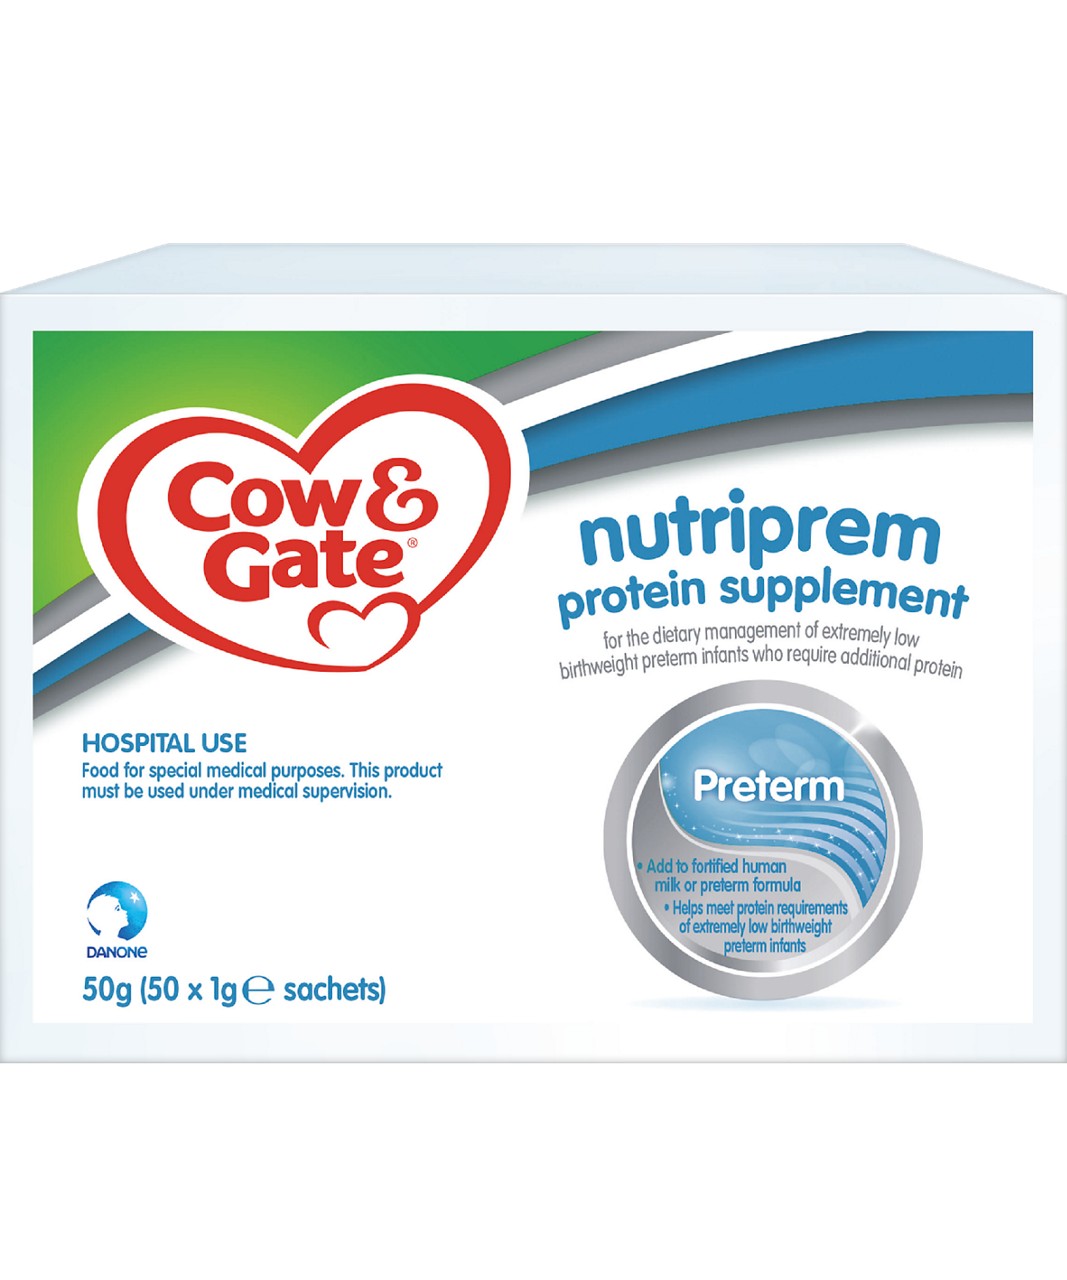 en-GB,Cow & Gate nutriprem Protein Supplement